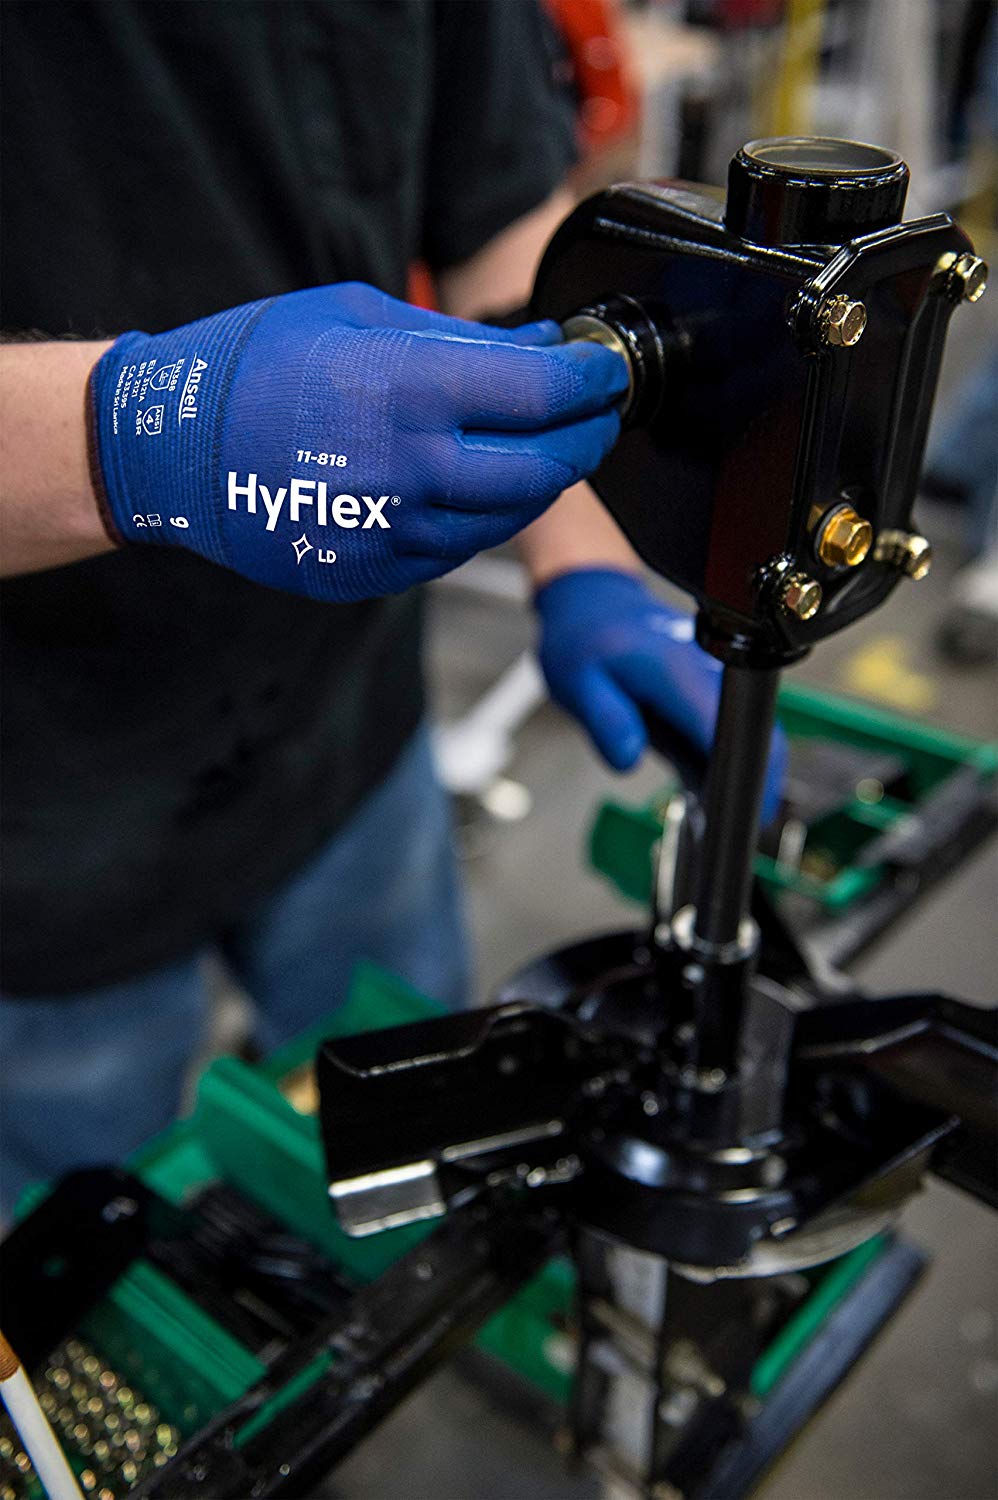 Ansell 11-818 HyFlex Nylon FORTIX Nitrile Foam Coating Work Gloves 4.1.2.1